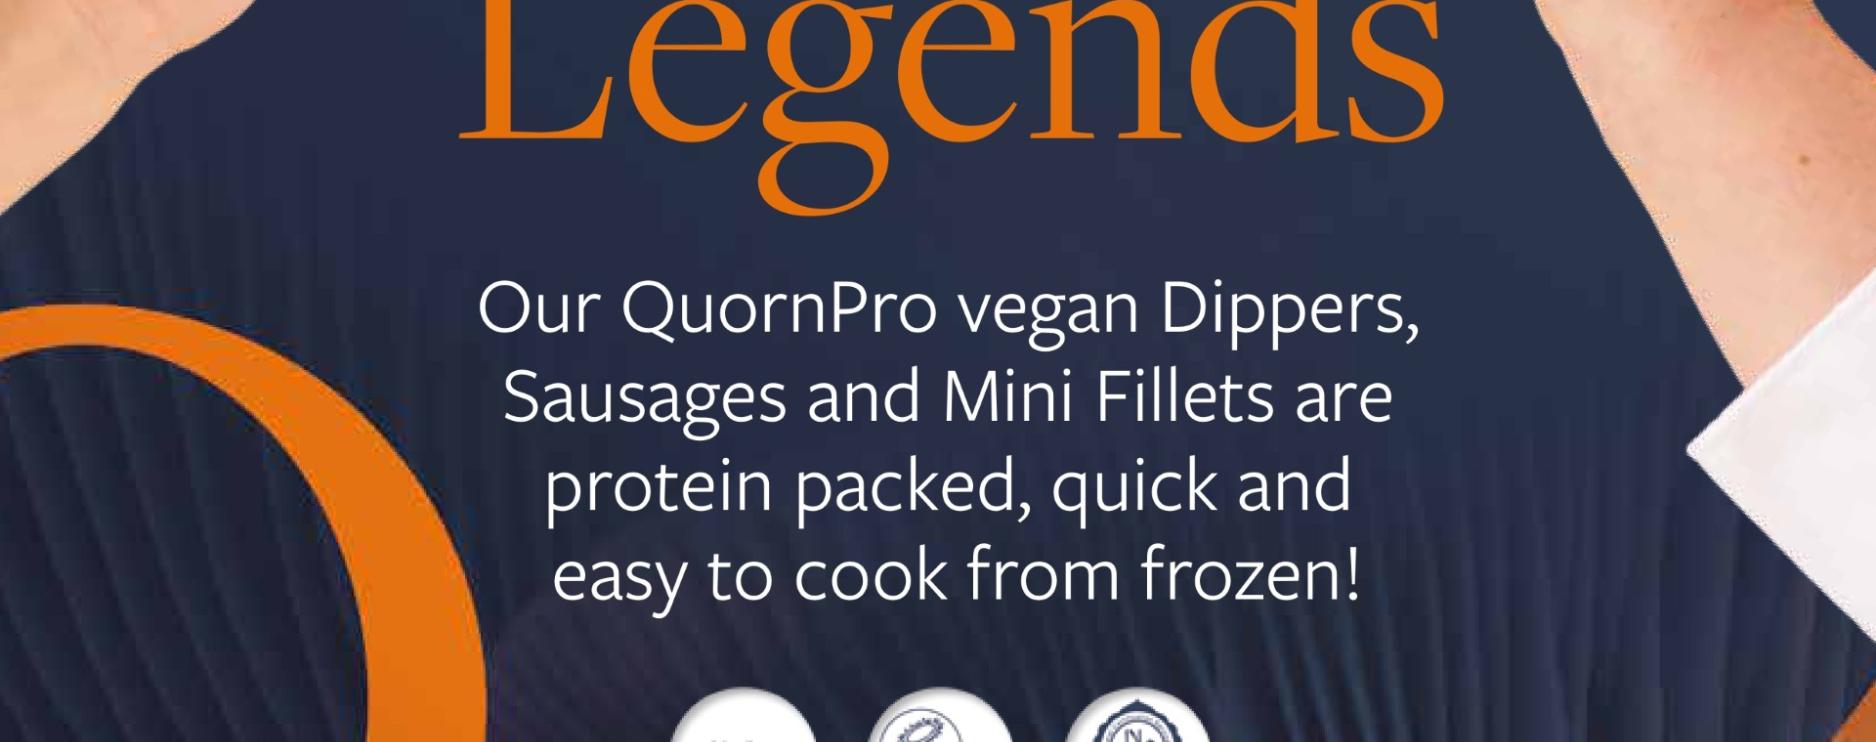 QuornPro launches Lunch Legends campaign